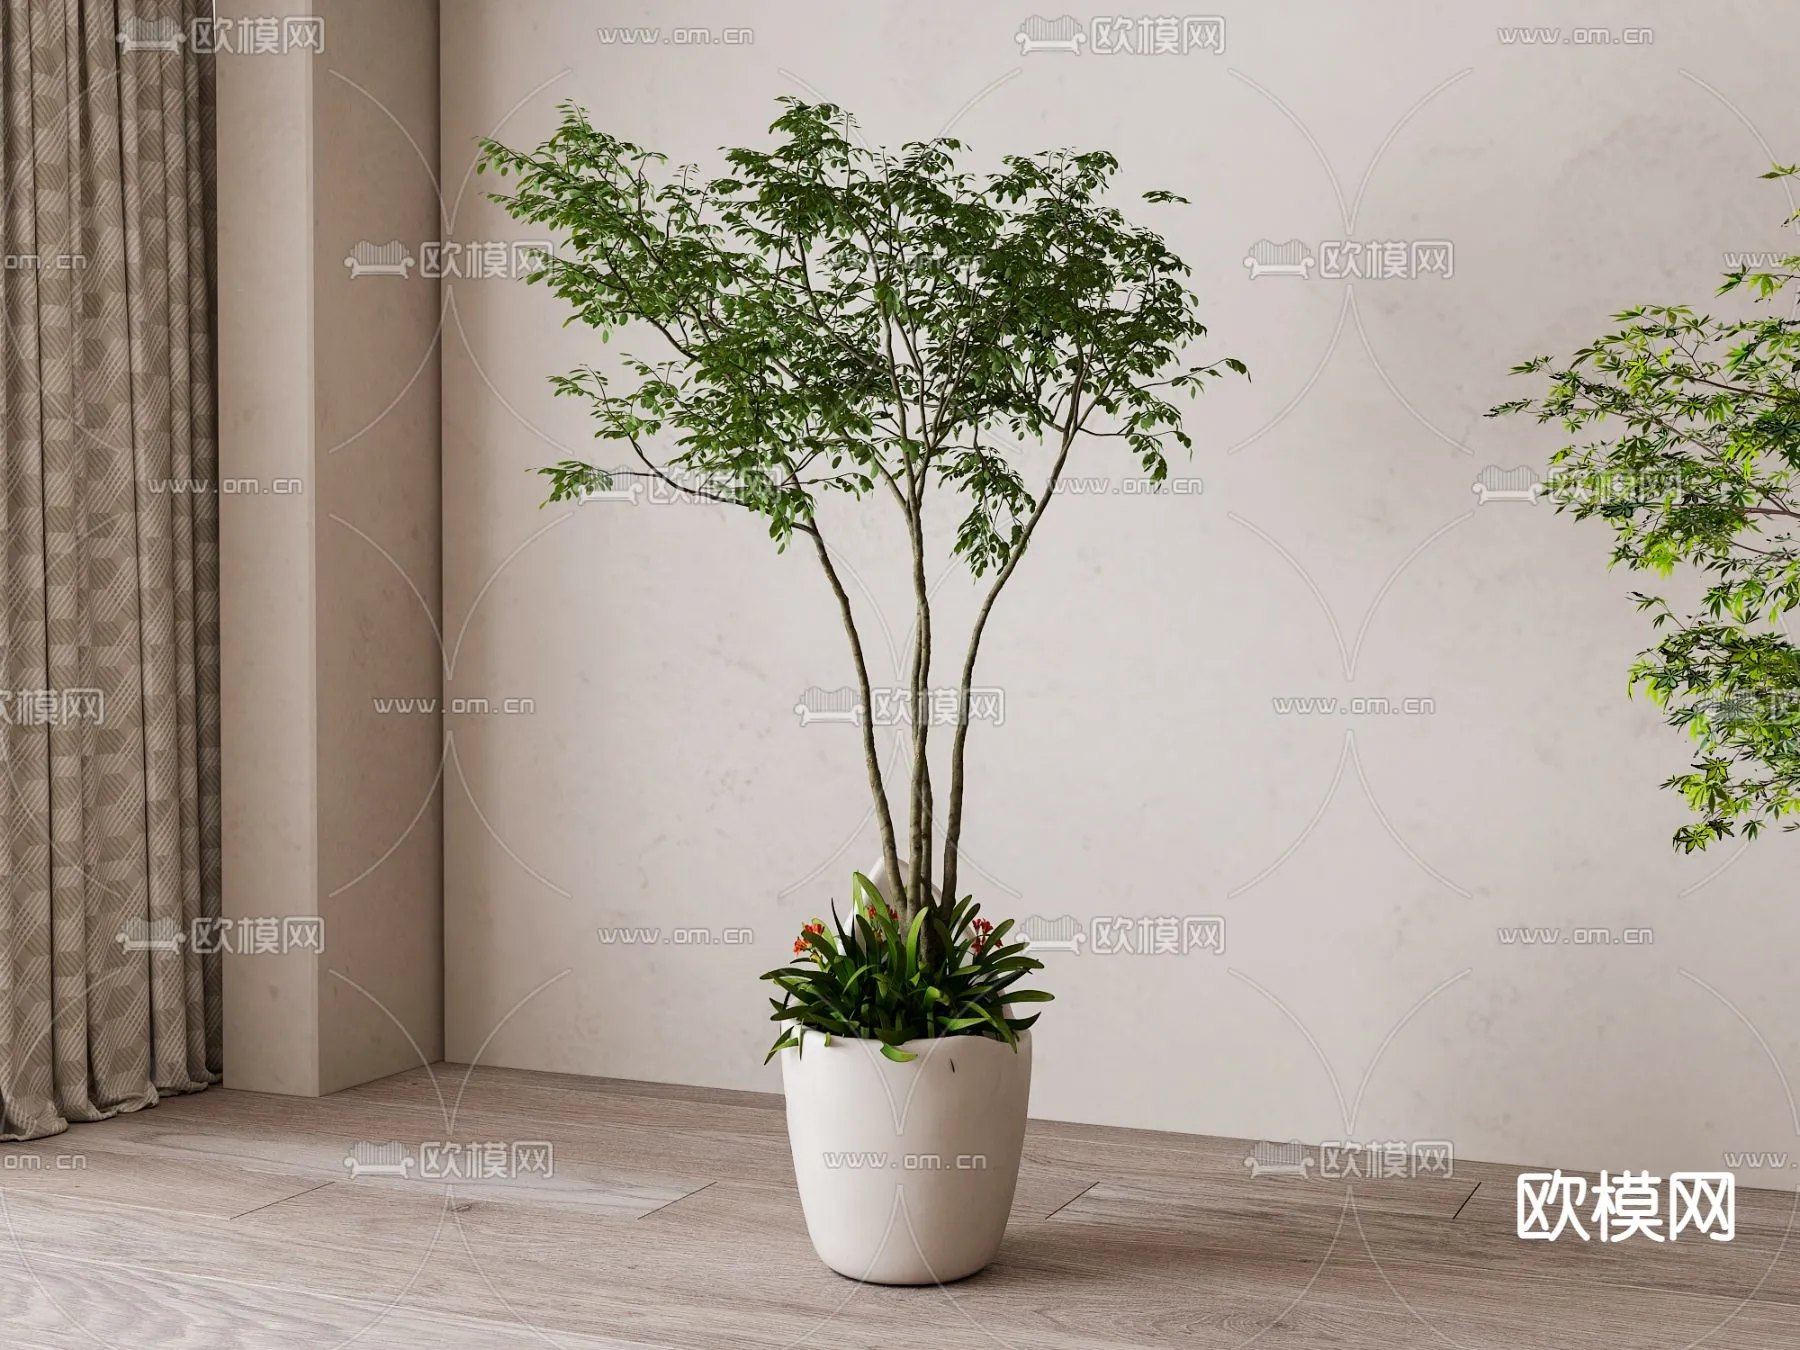 Plant – VRAY / CORONA – 3D MODEL – 422